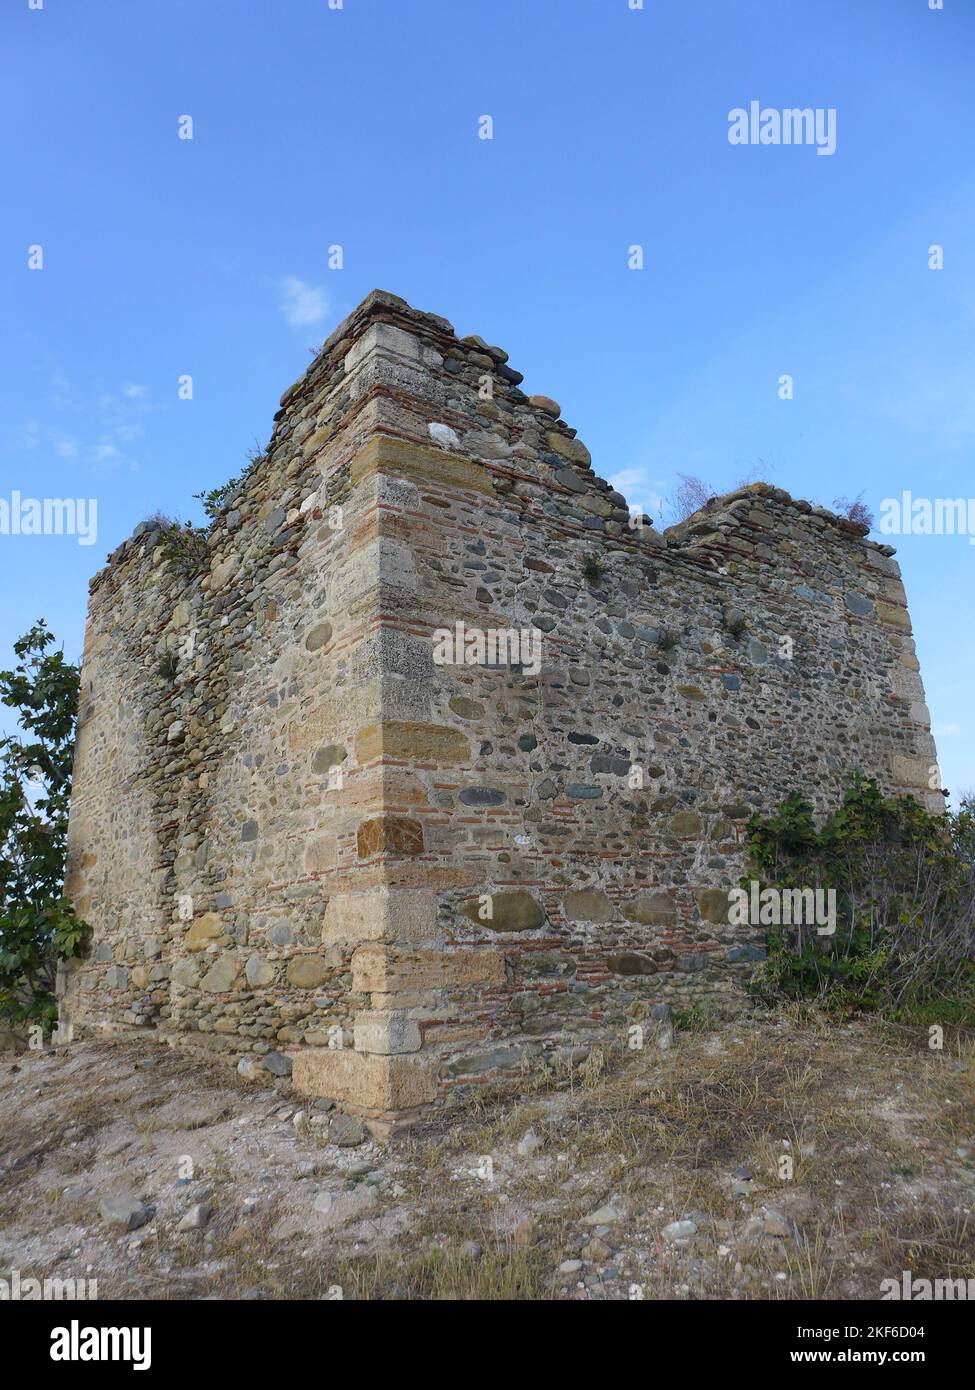 Turm in Pinson mittelalterliche Siedlung, Basilika, Thessaloniki, Griechenland Stockfoto